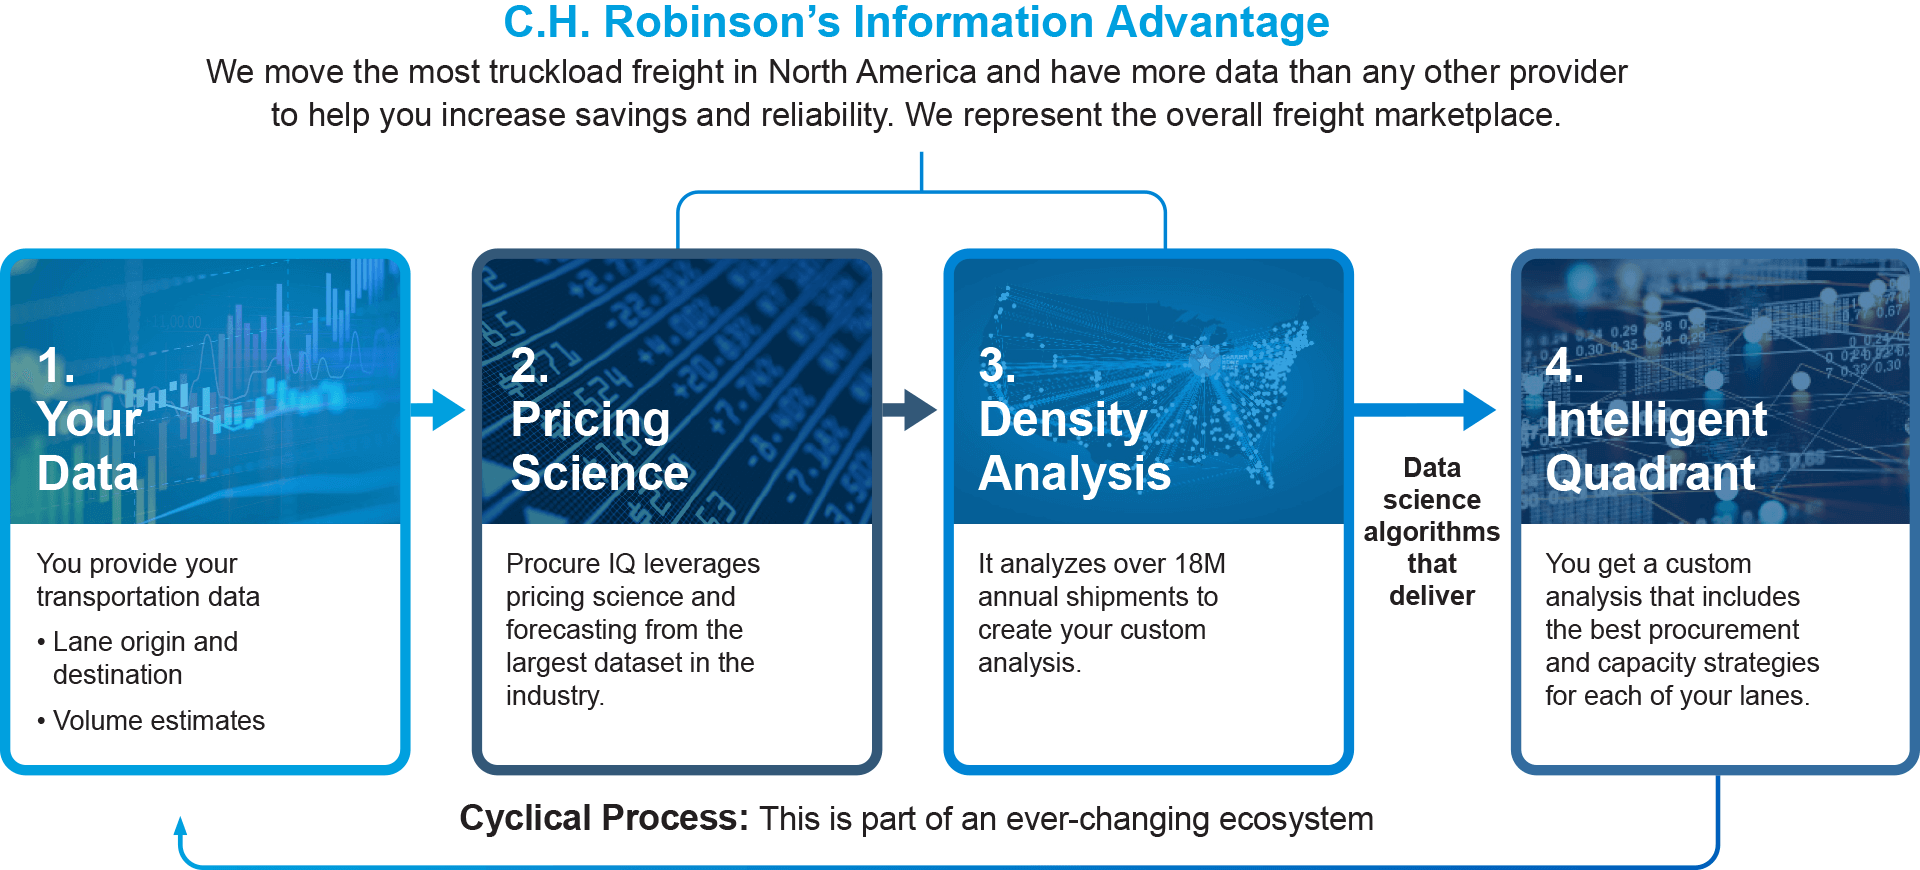 ch robinson's information advantage